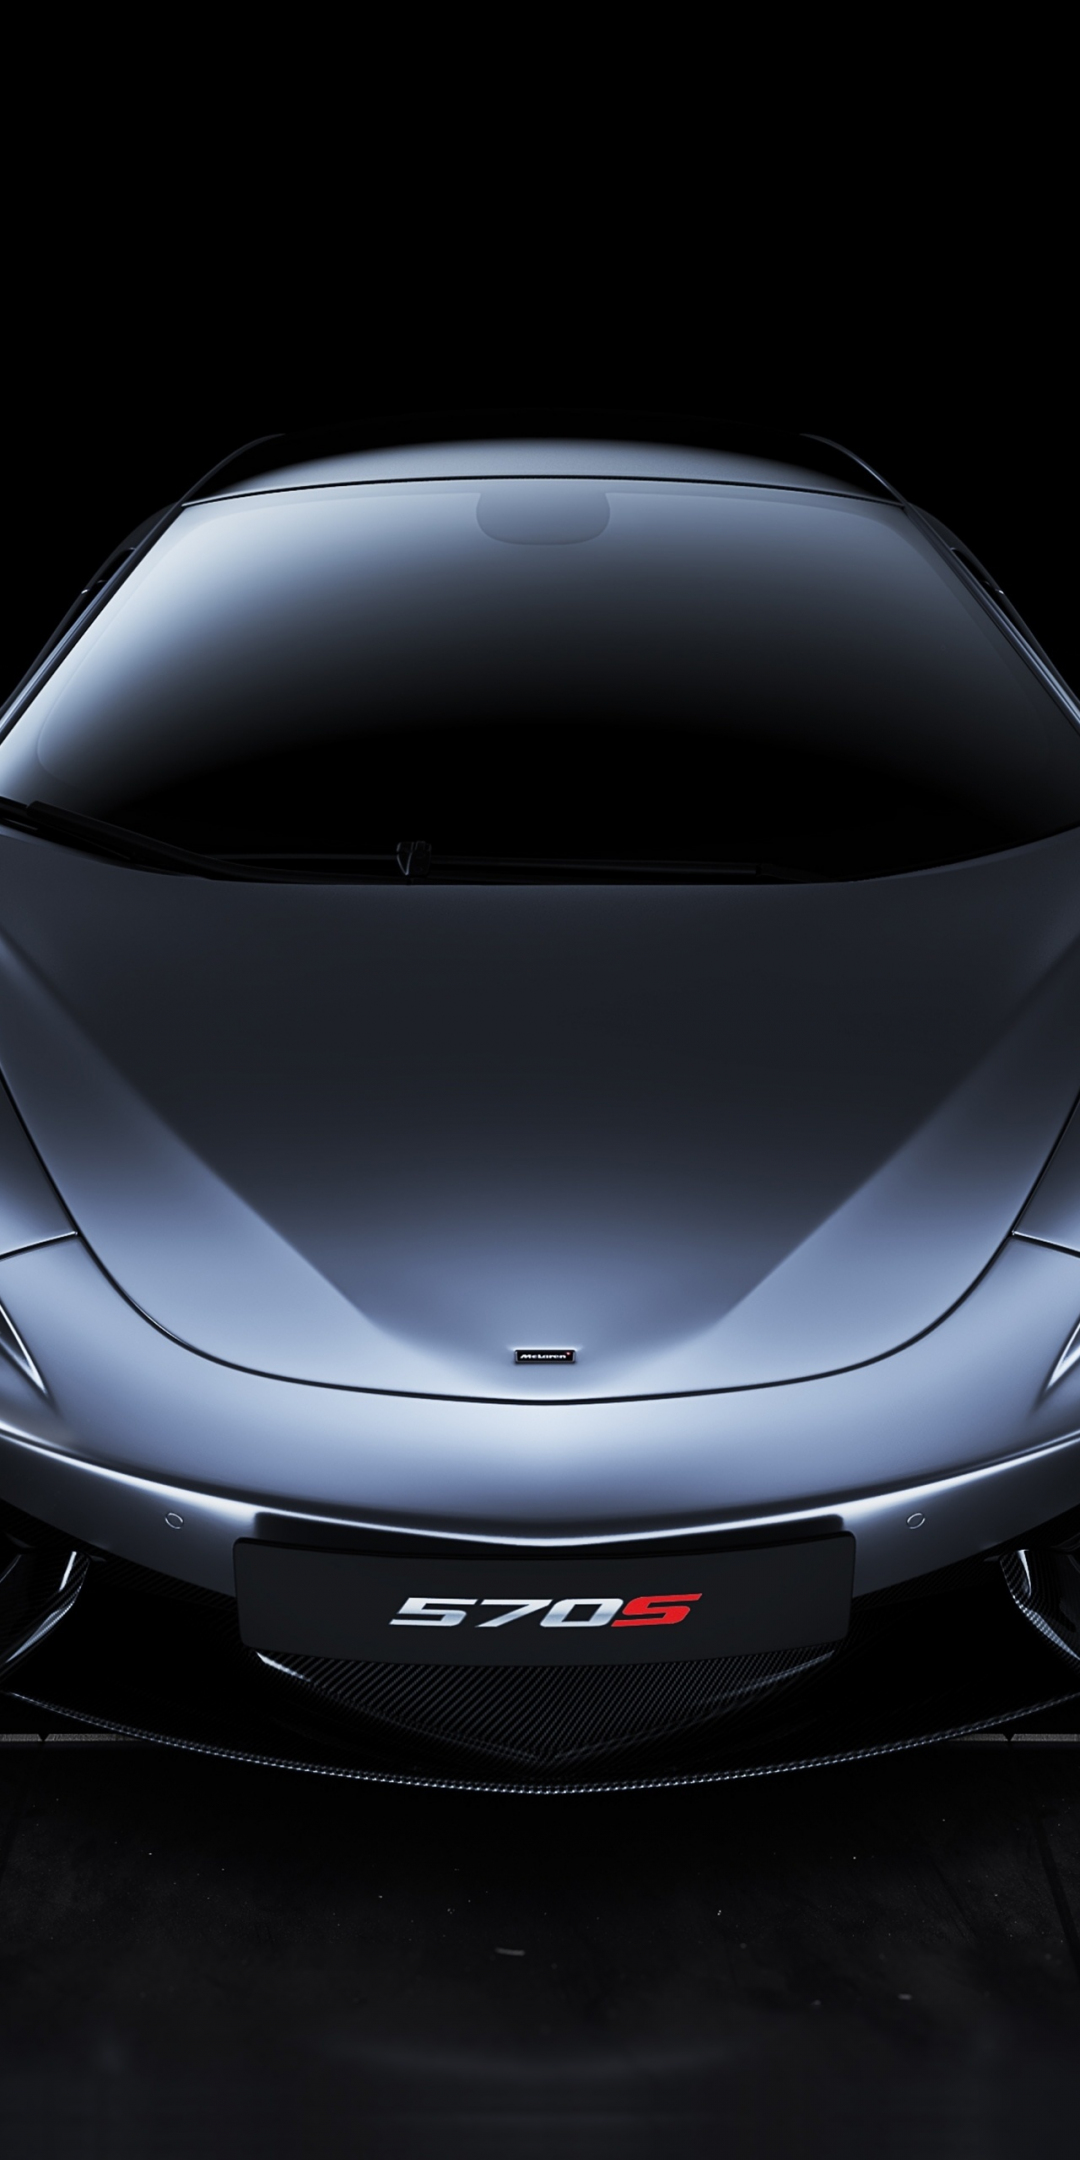 Supercar, McLaren 570s, front, 1080x2160 wallpaper